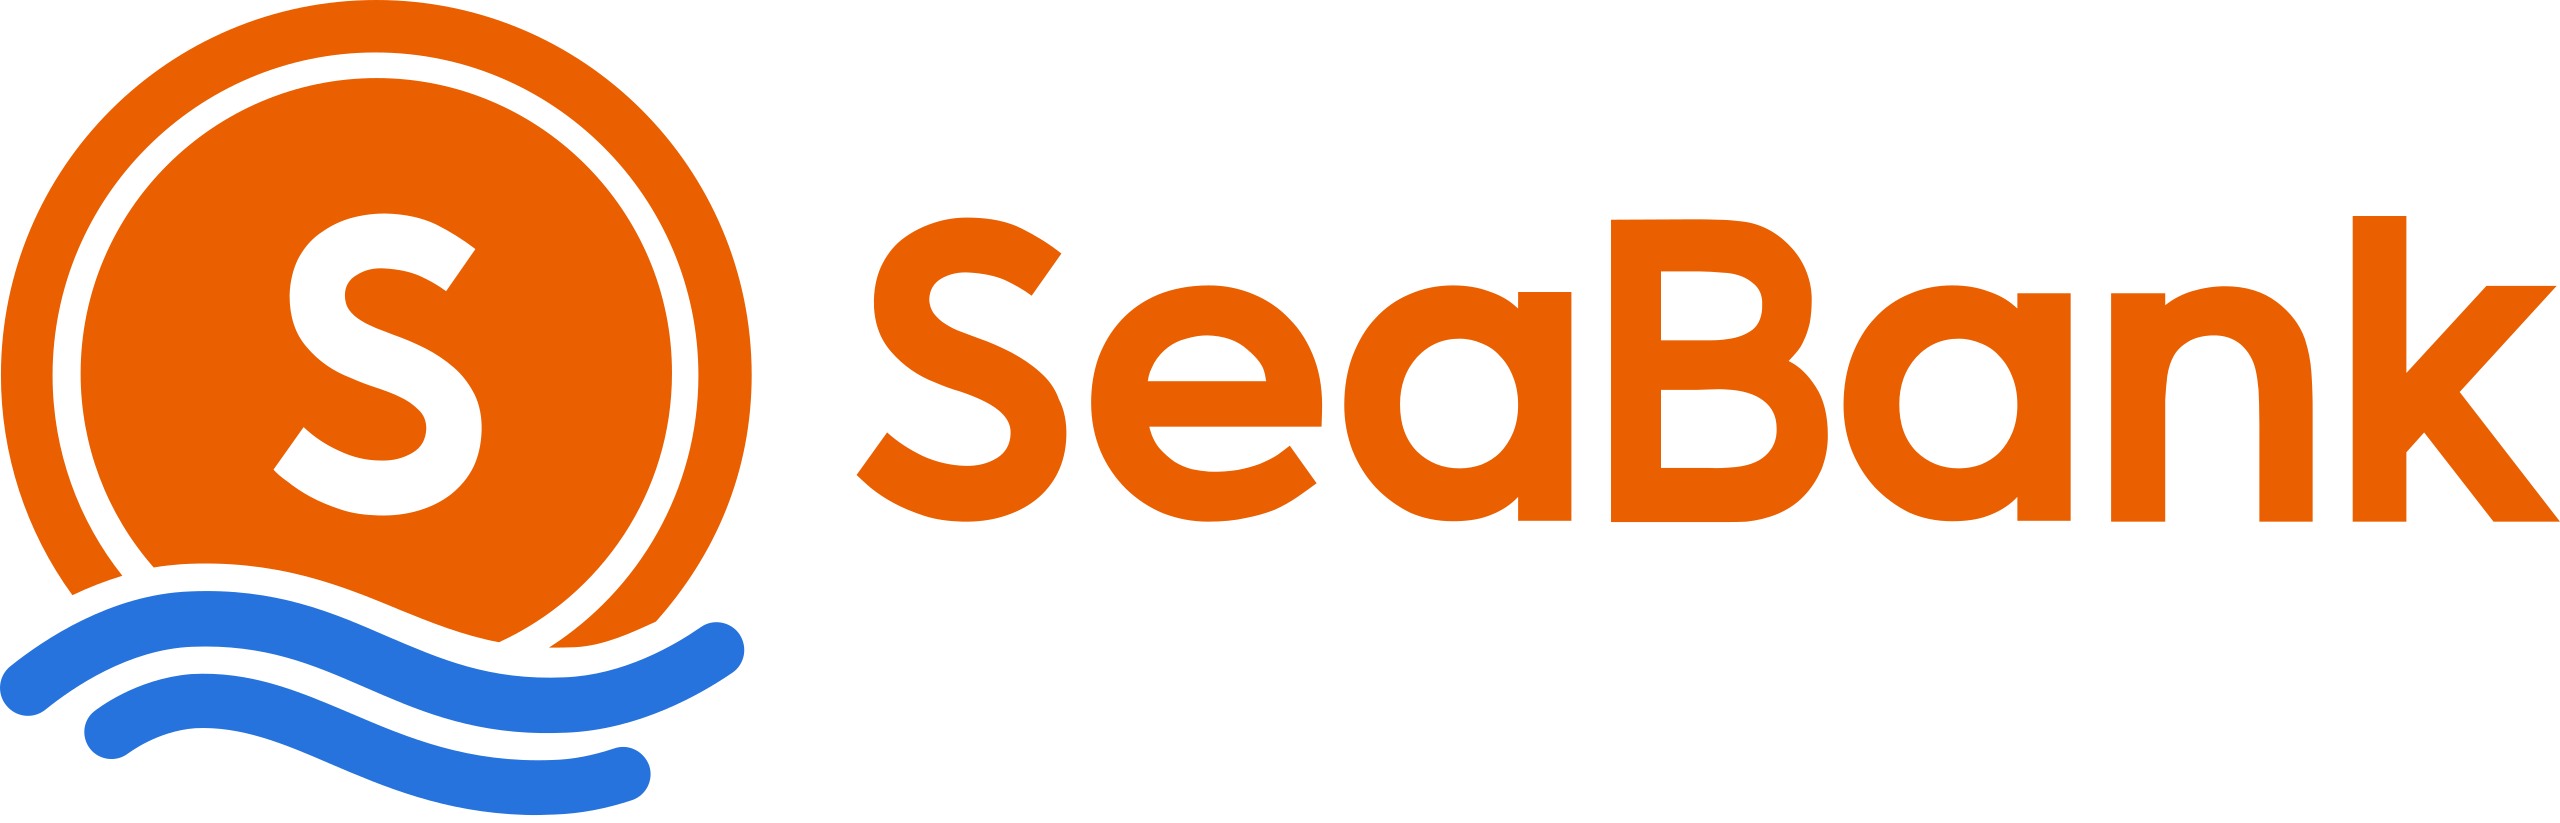 SeaBank.svg